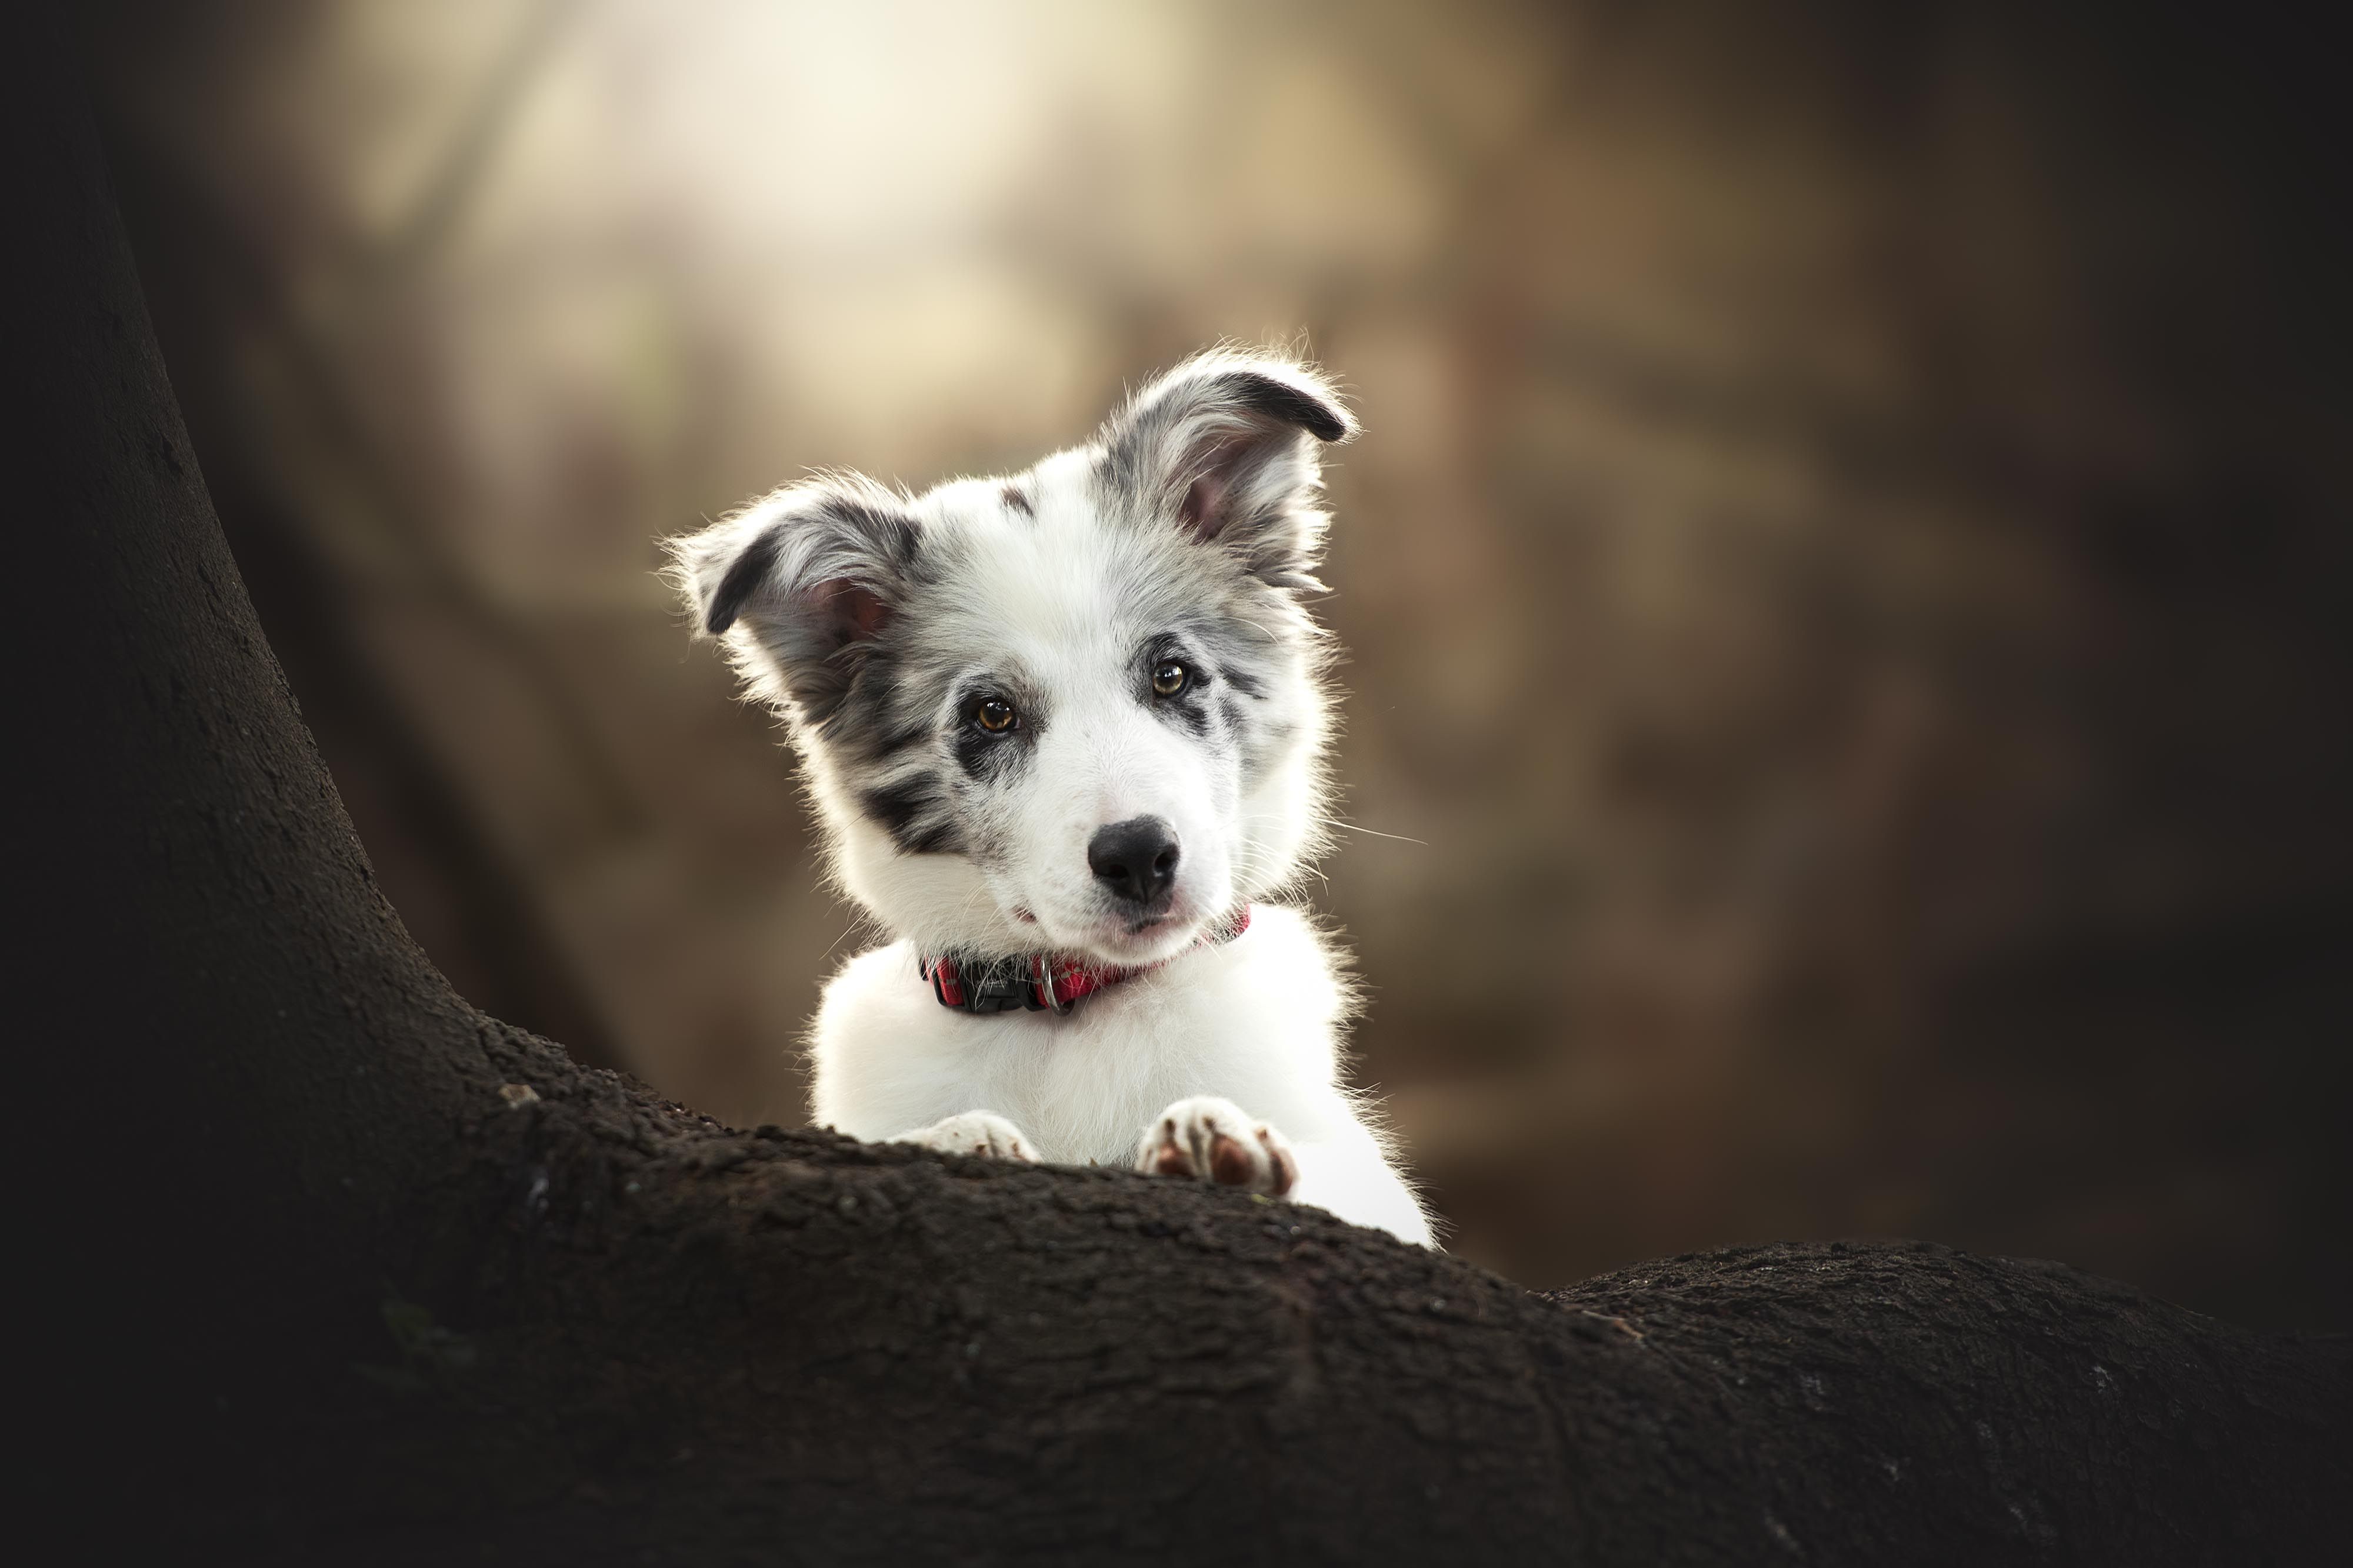 wp-content/uploads/puppy-in-woods-cute.jpg